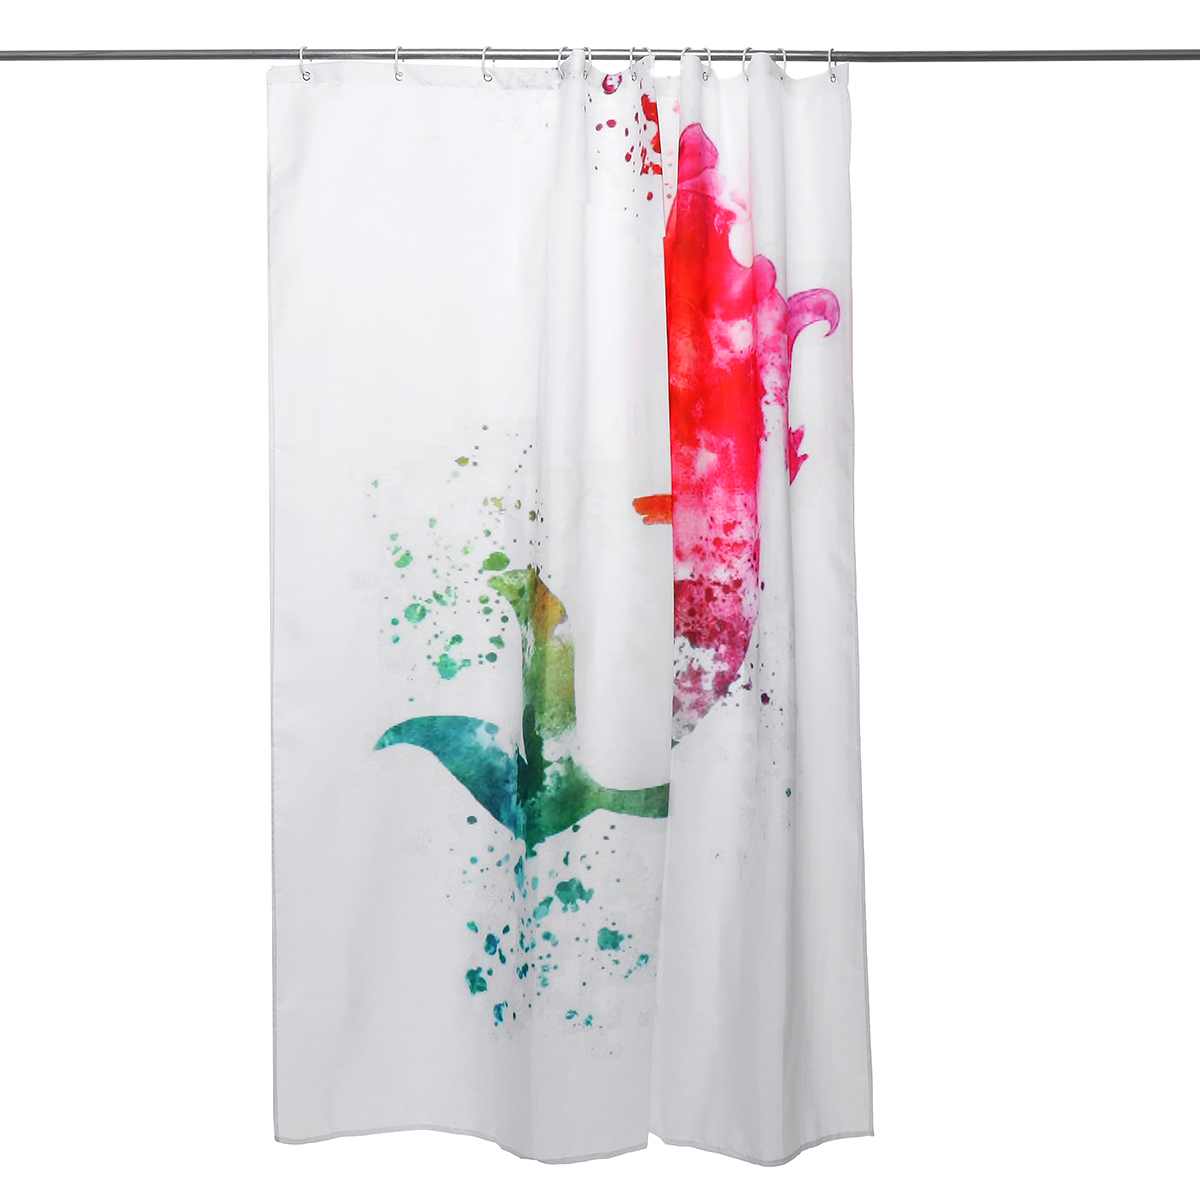 180x180CM--709quotx709quot-3D-Bathroom-Waterproof-Shower-Curtain-Mermaid-Pattern-With-12-Plastic-Hoo-1425089